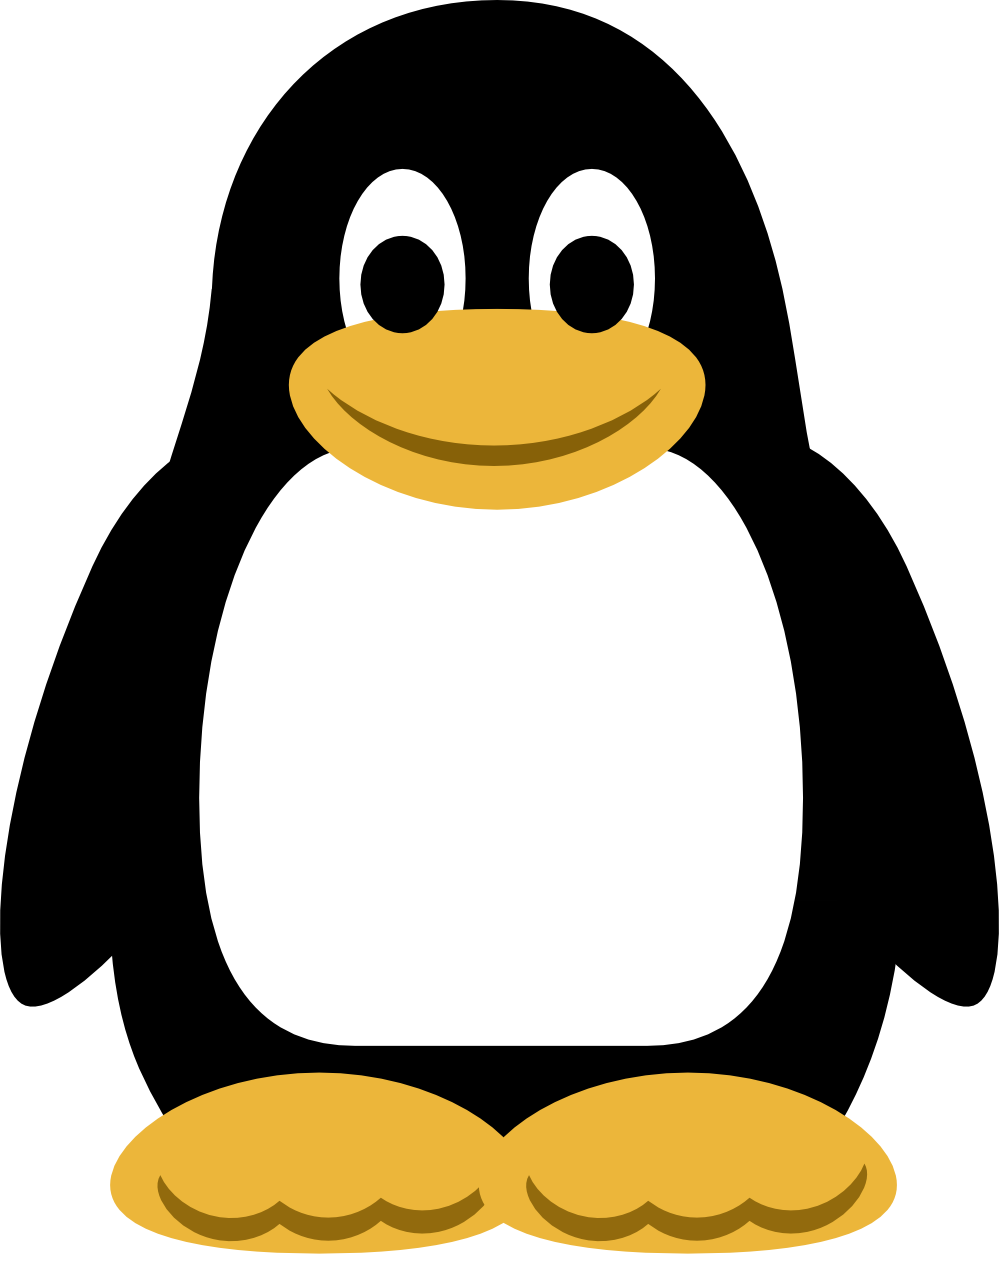 Penguin Cartoon png download - 879*1600 - Free Transparent Penguin png  Download. - CleanPNG / KissPNG